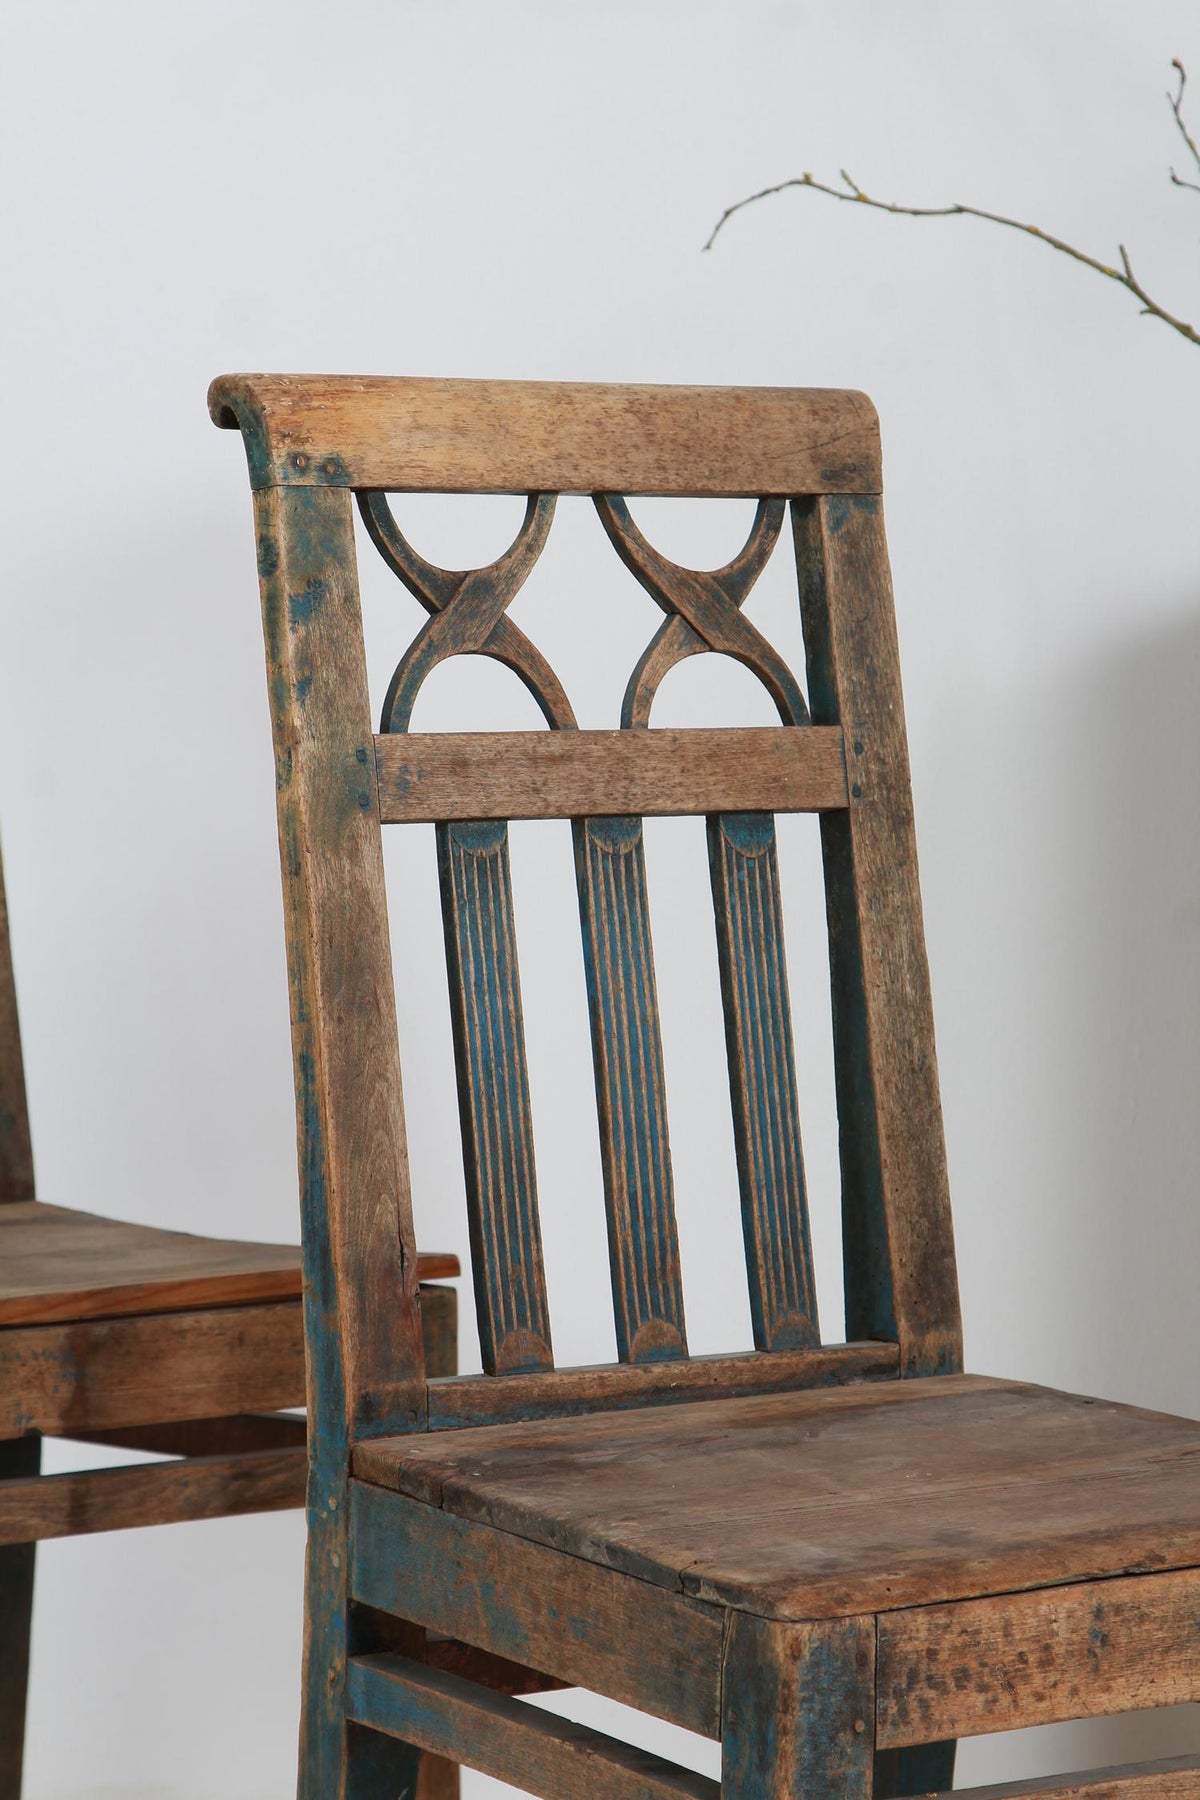 Pair of Early 19thC Primitive Swedish Folk Art Chairs in Original Patina